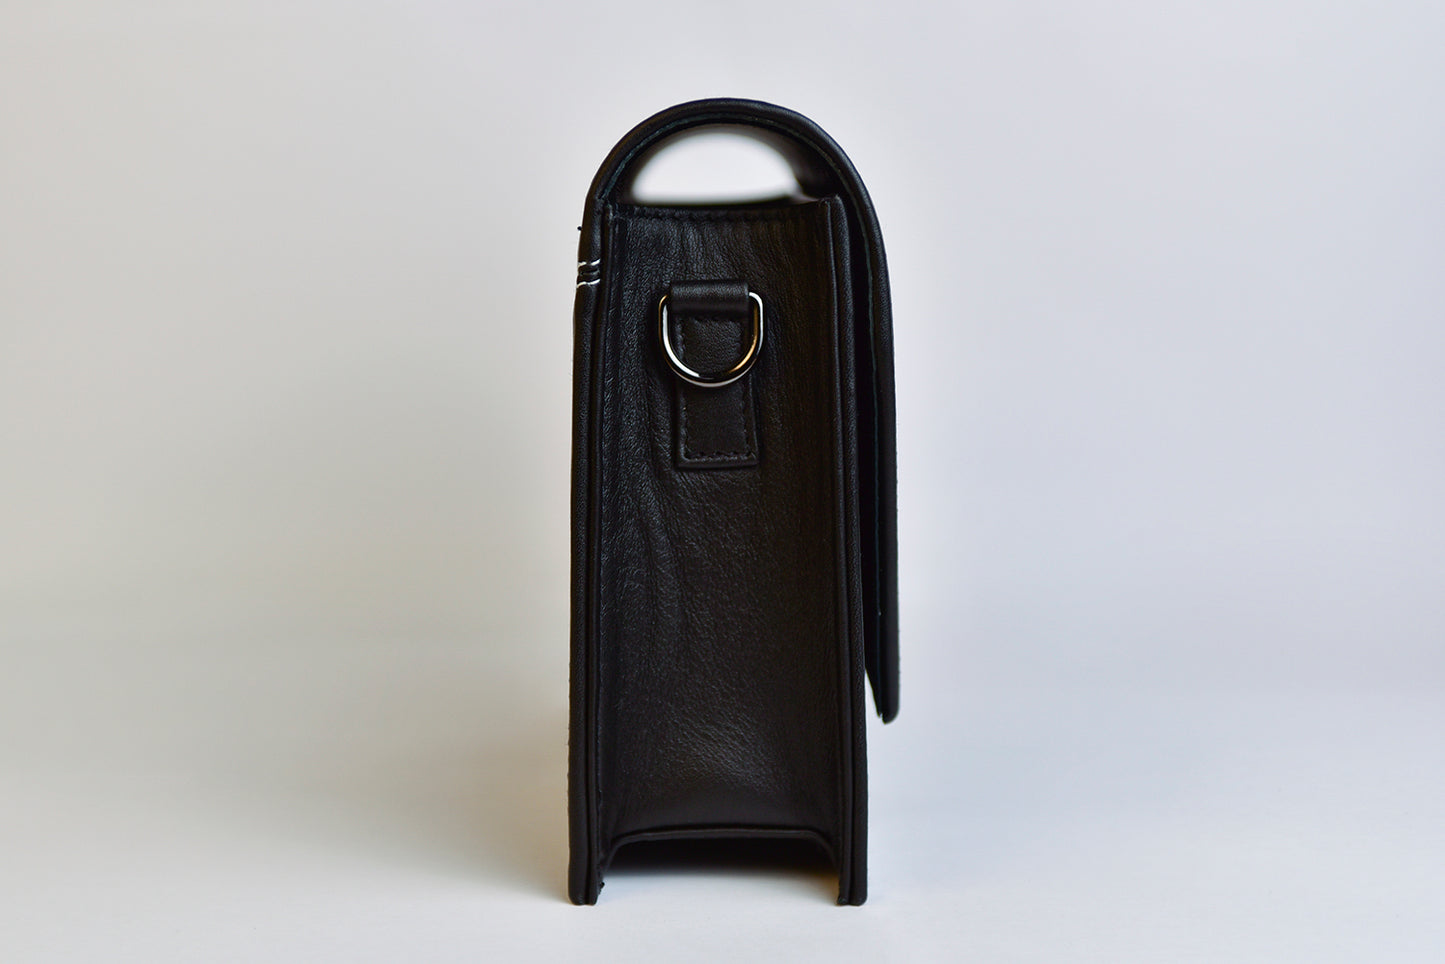 Black leather handbag clutch